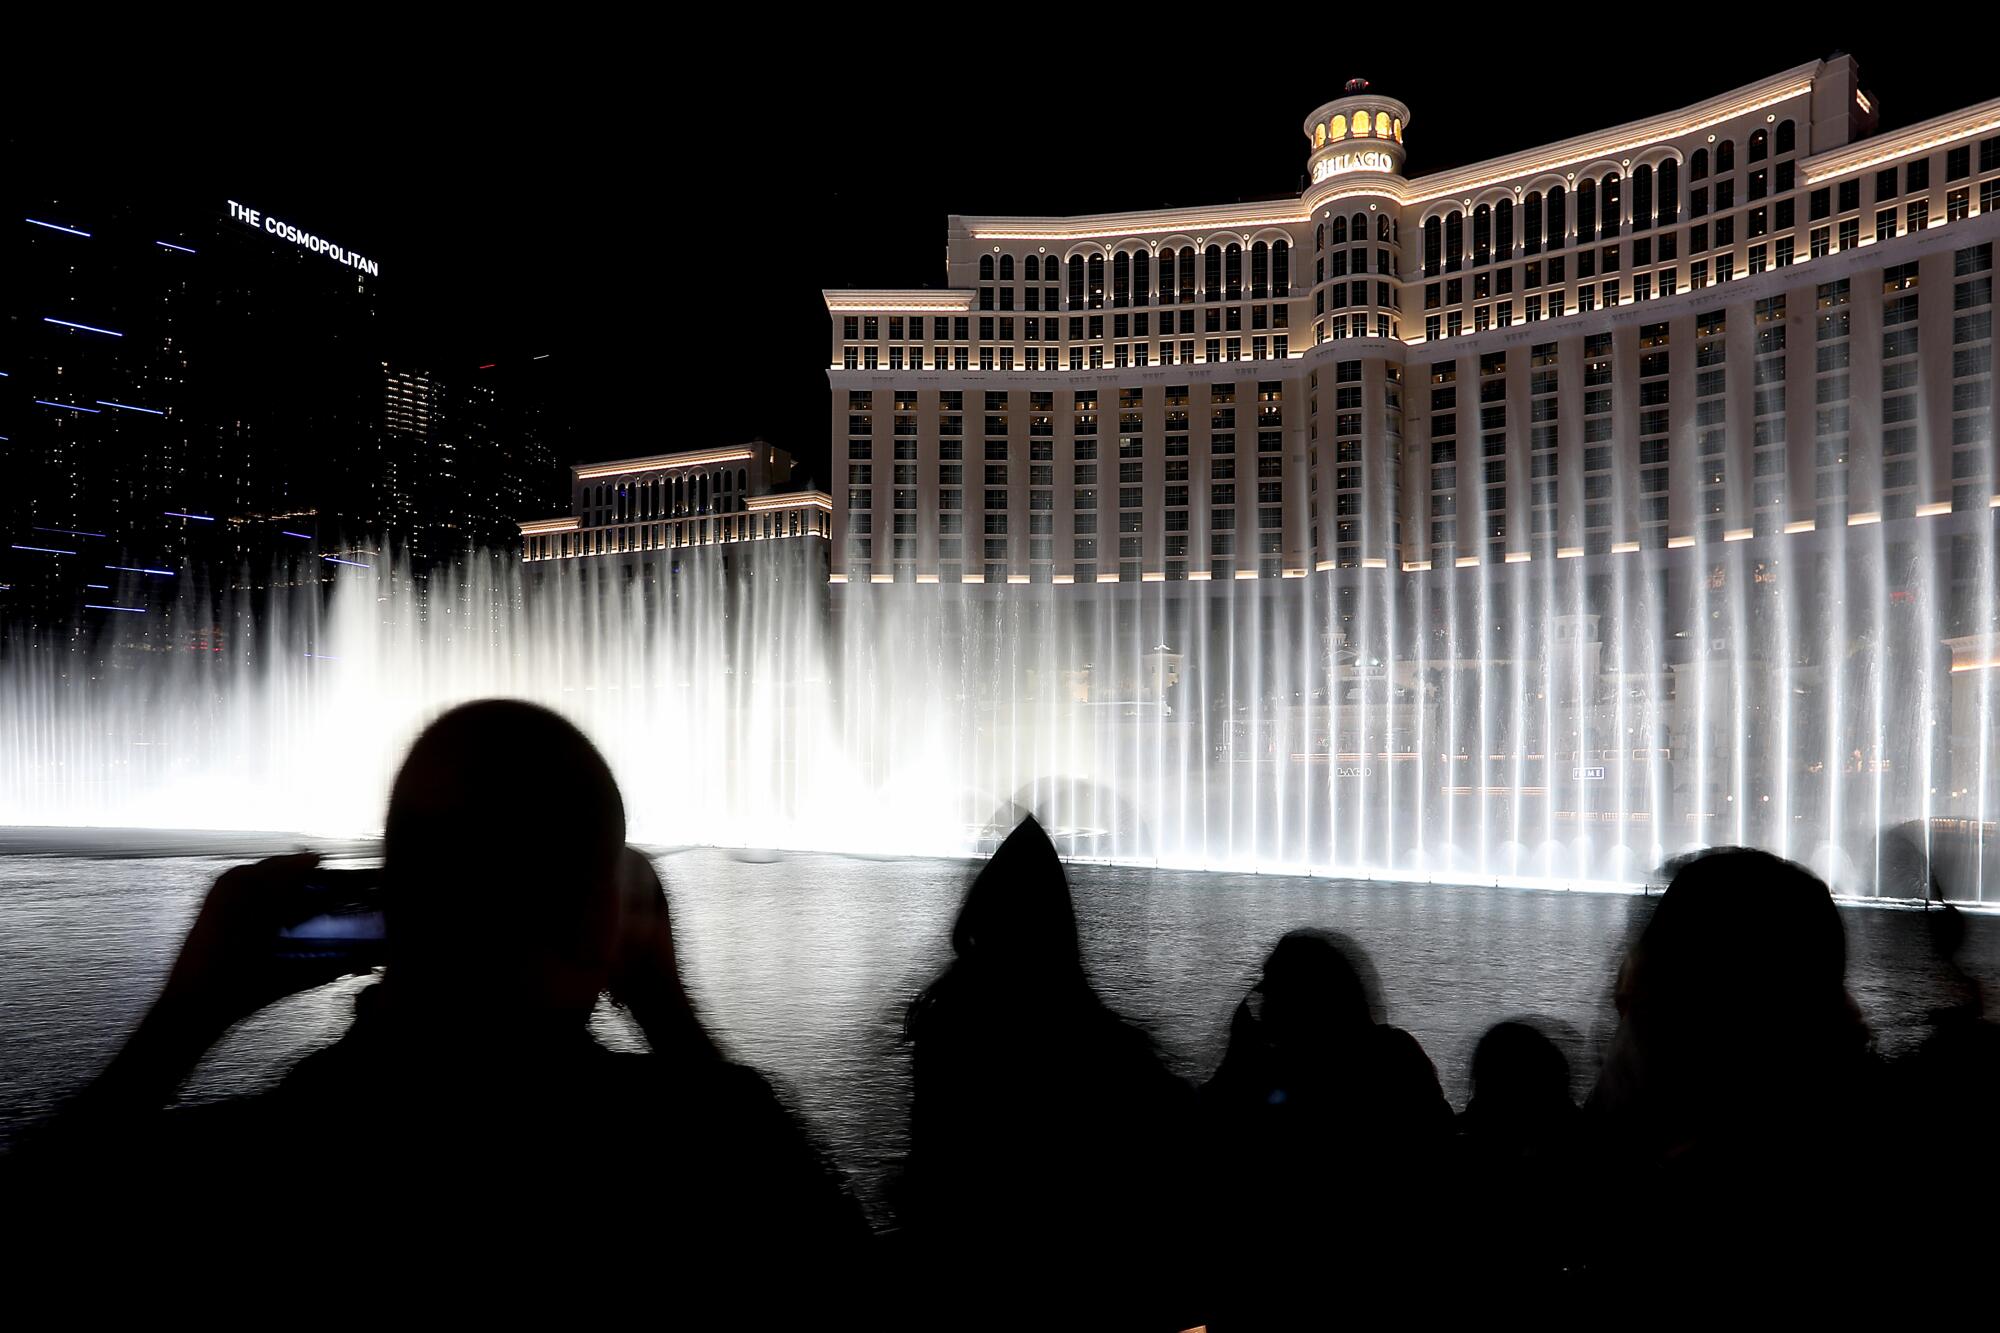 Will water woes slow growth in Las Vegas?, Local Las Vegas